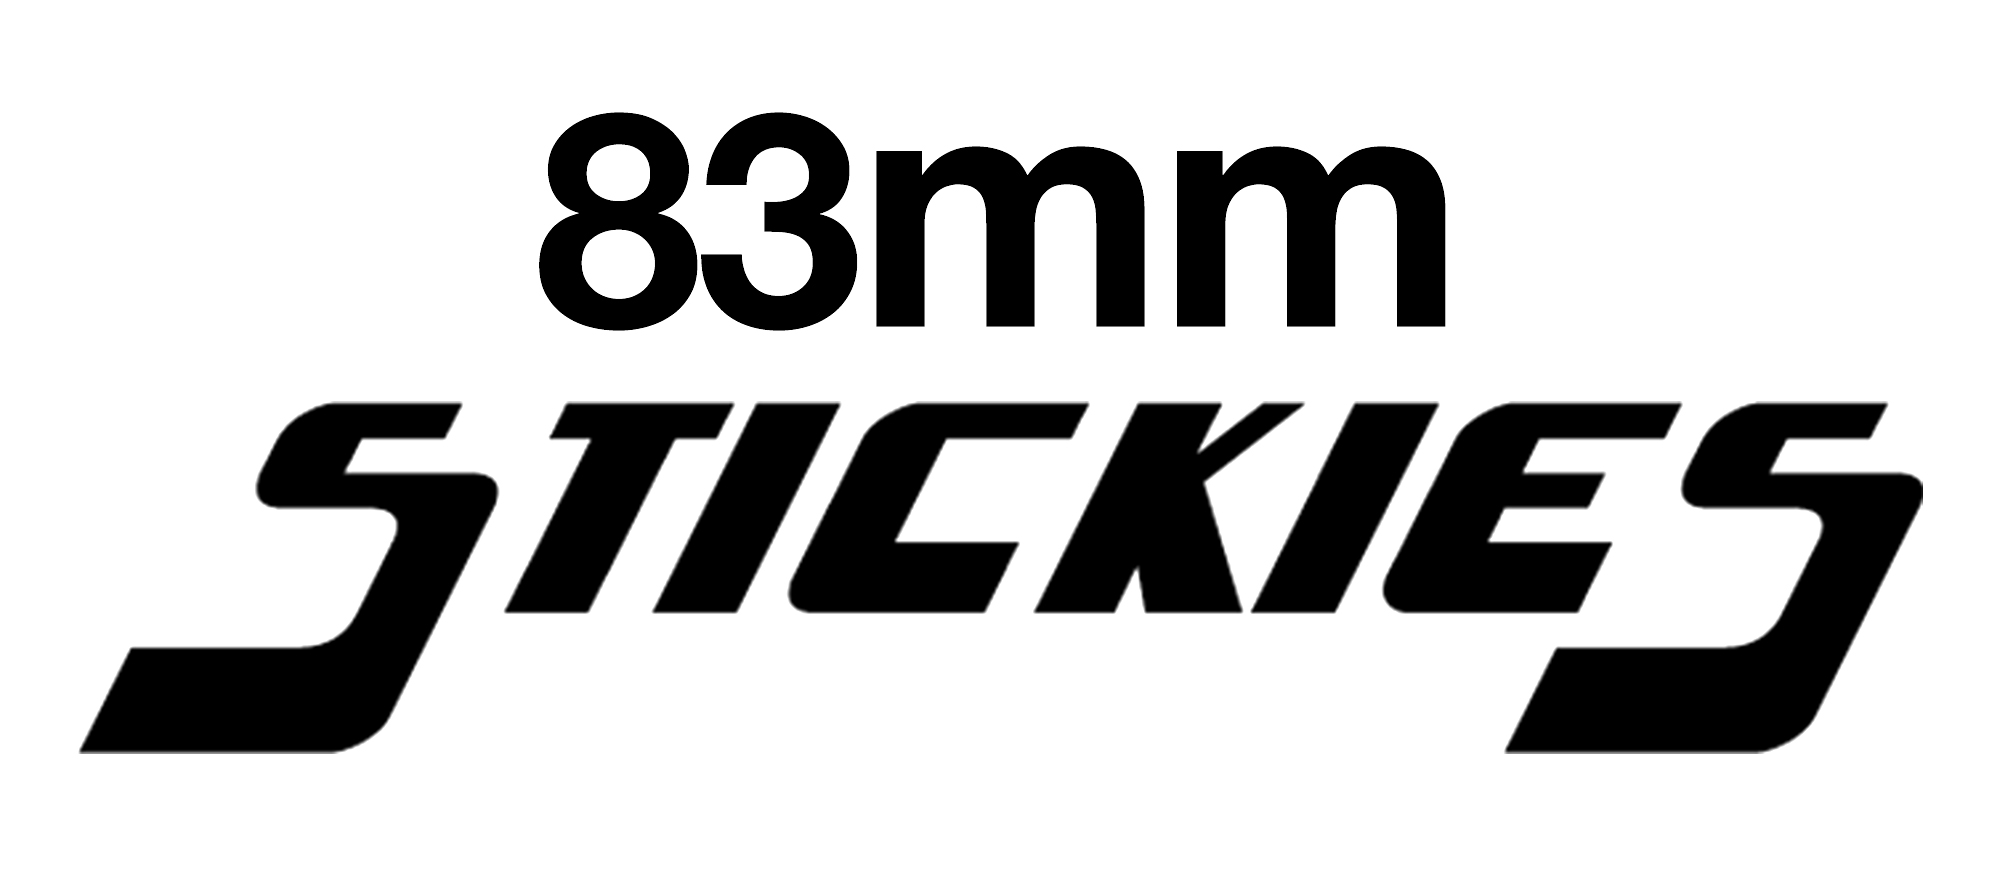 83mm Stickies Wheels Attribute Thumbnail